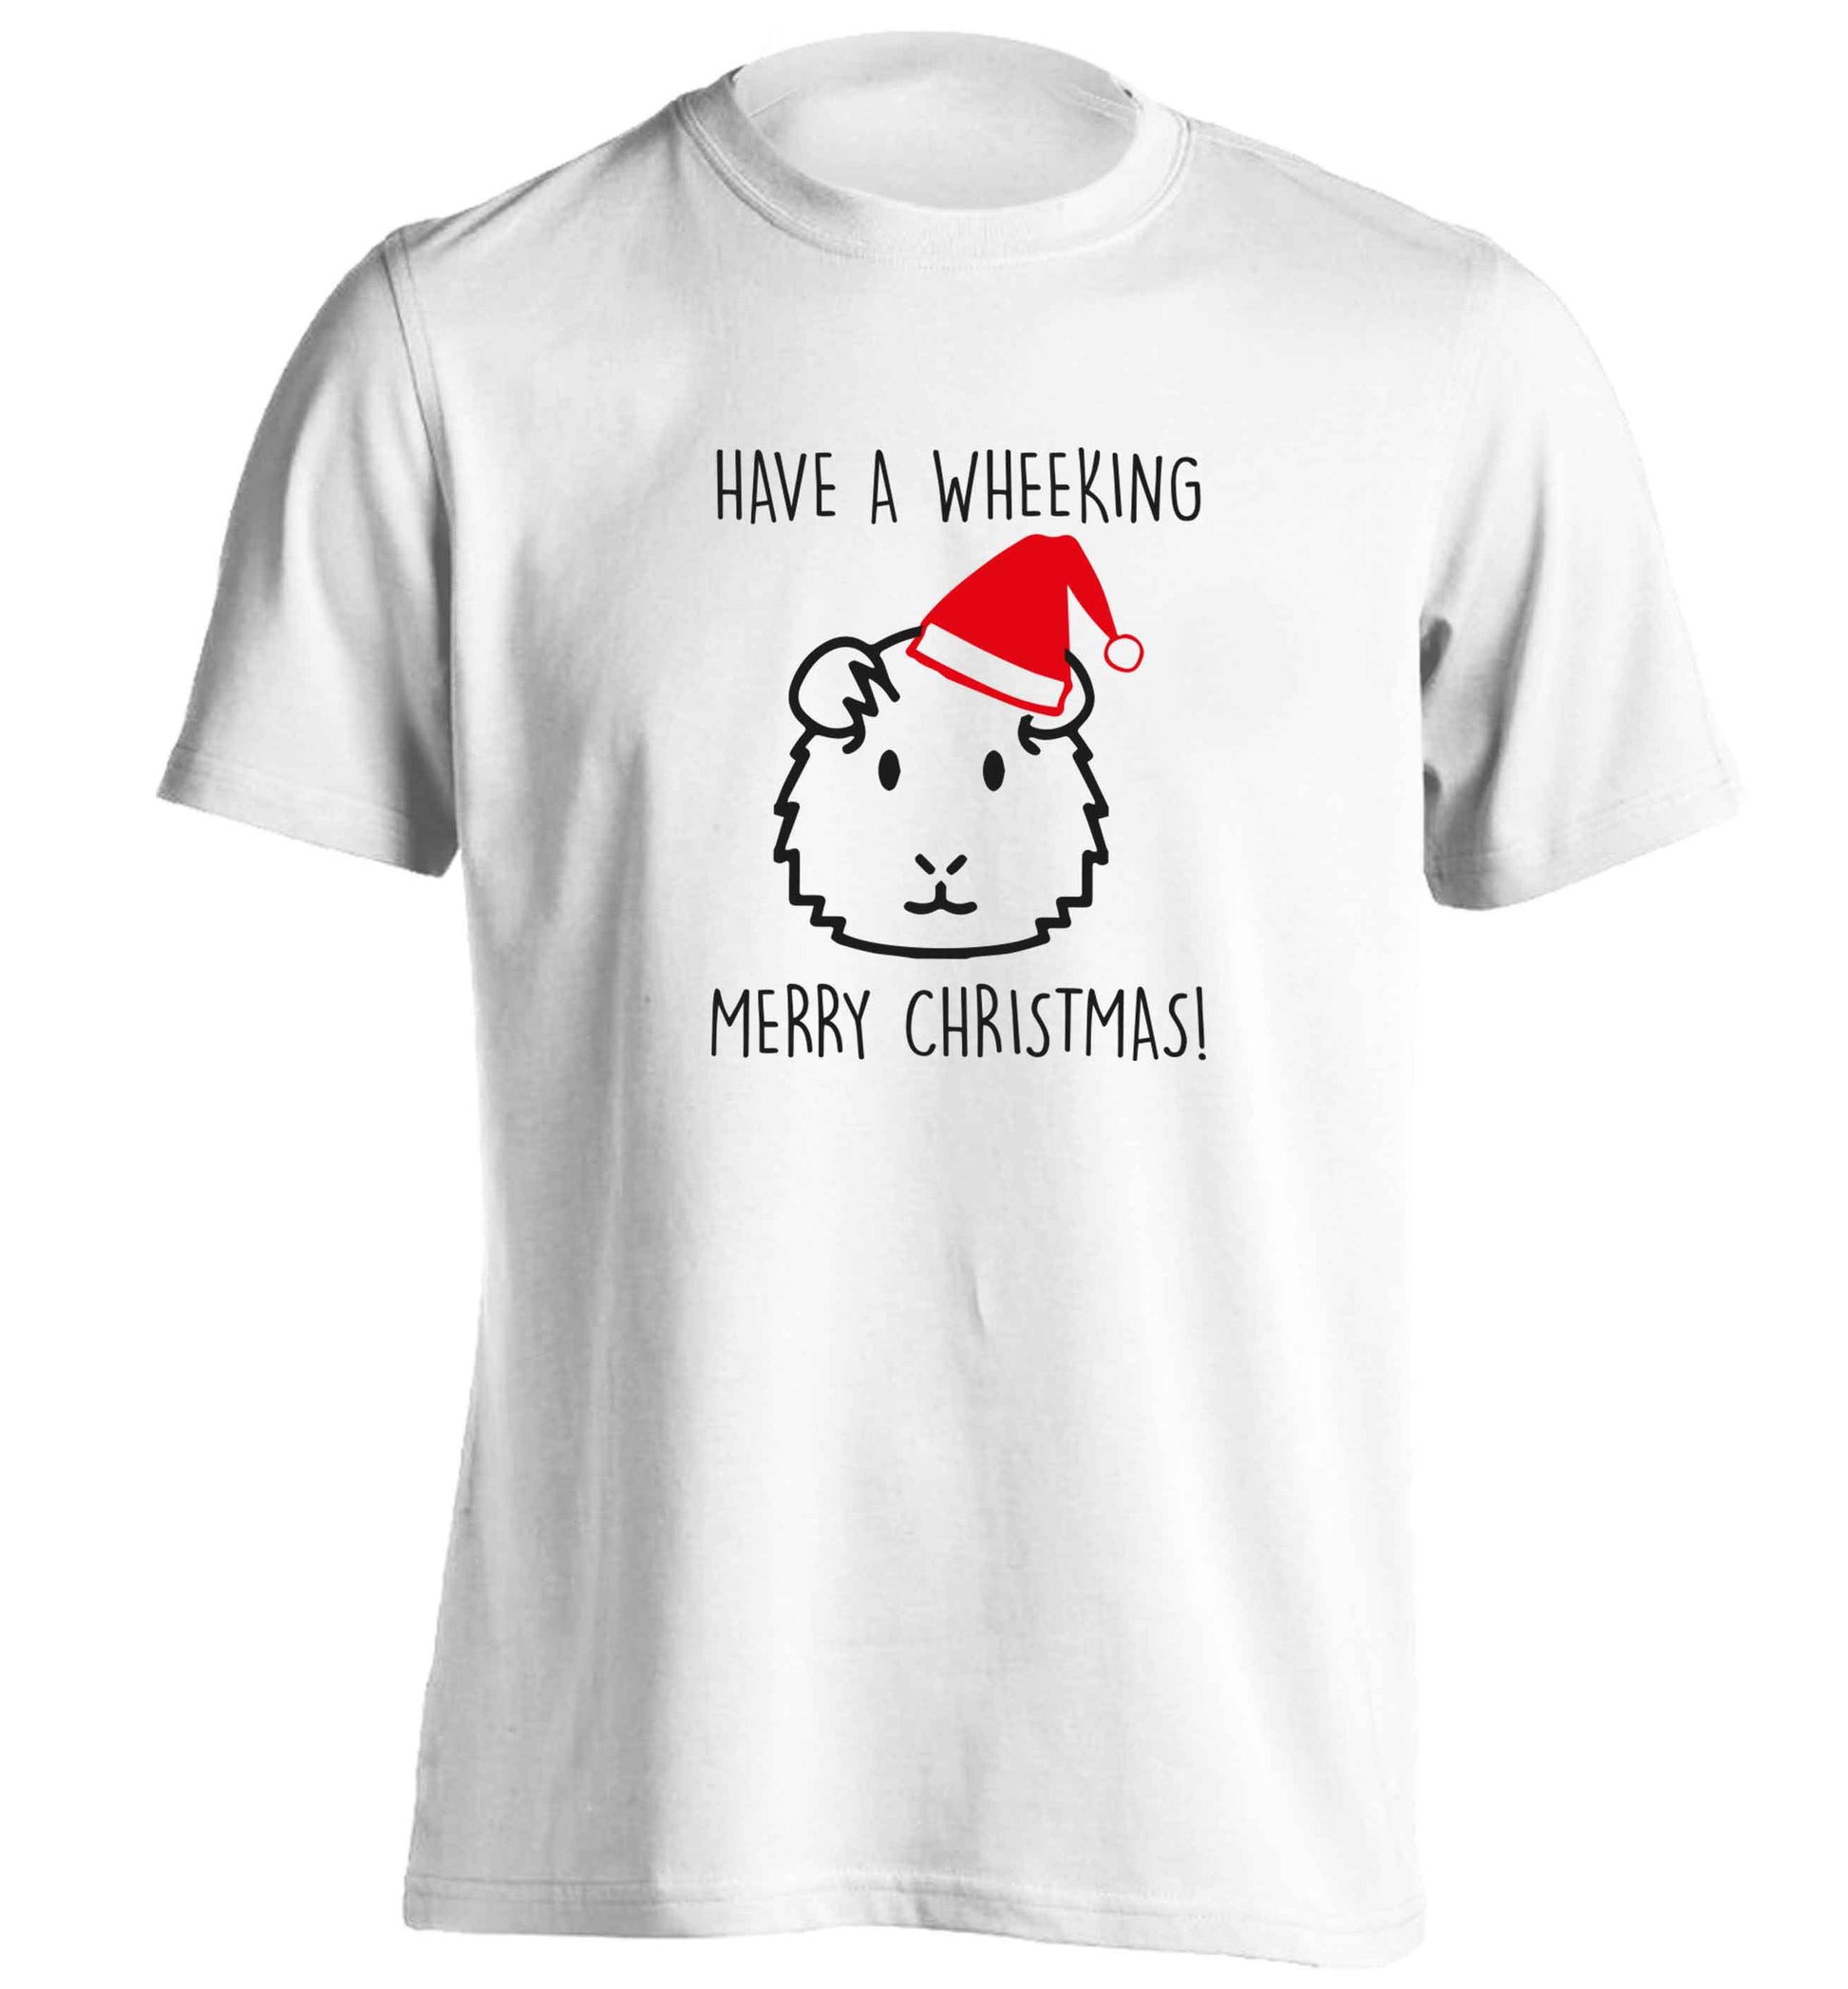 Have a wheeking merry Christmas adults unisex white Tshirt 2XL